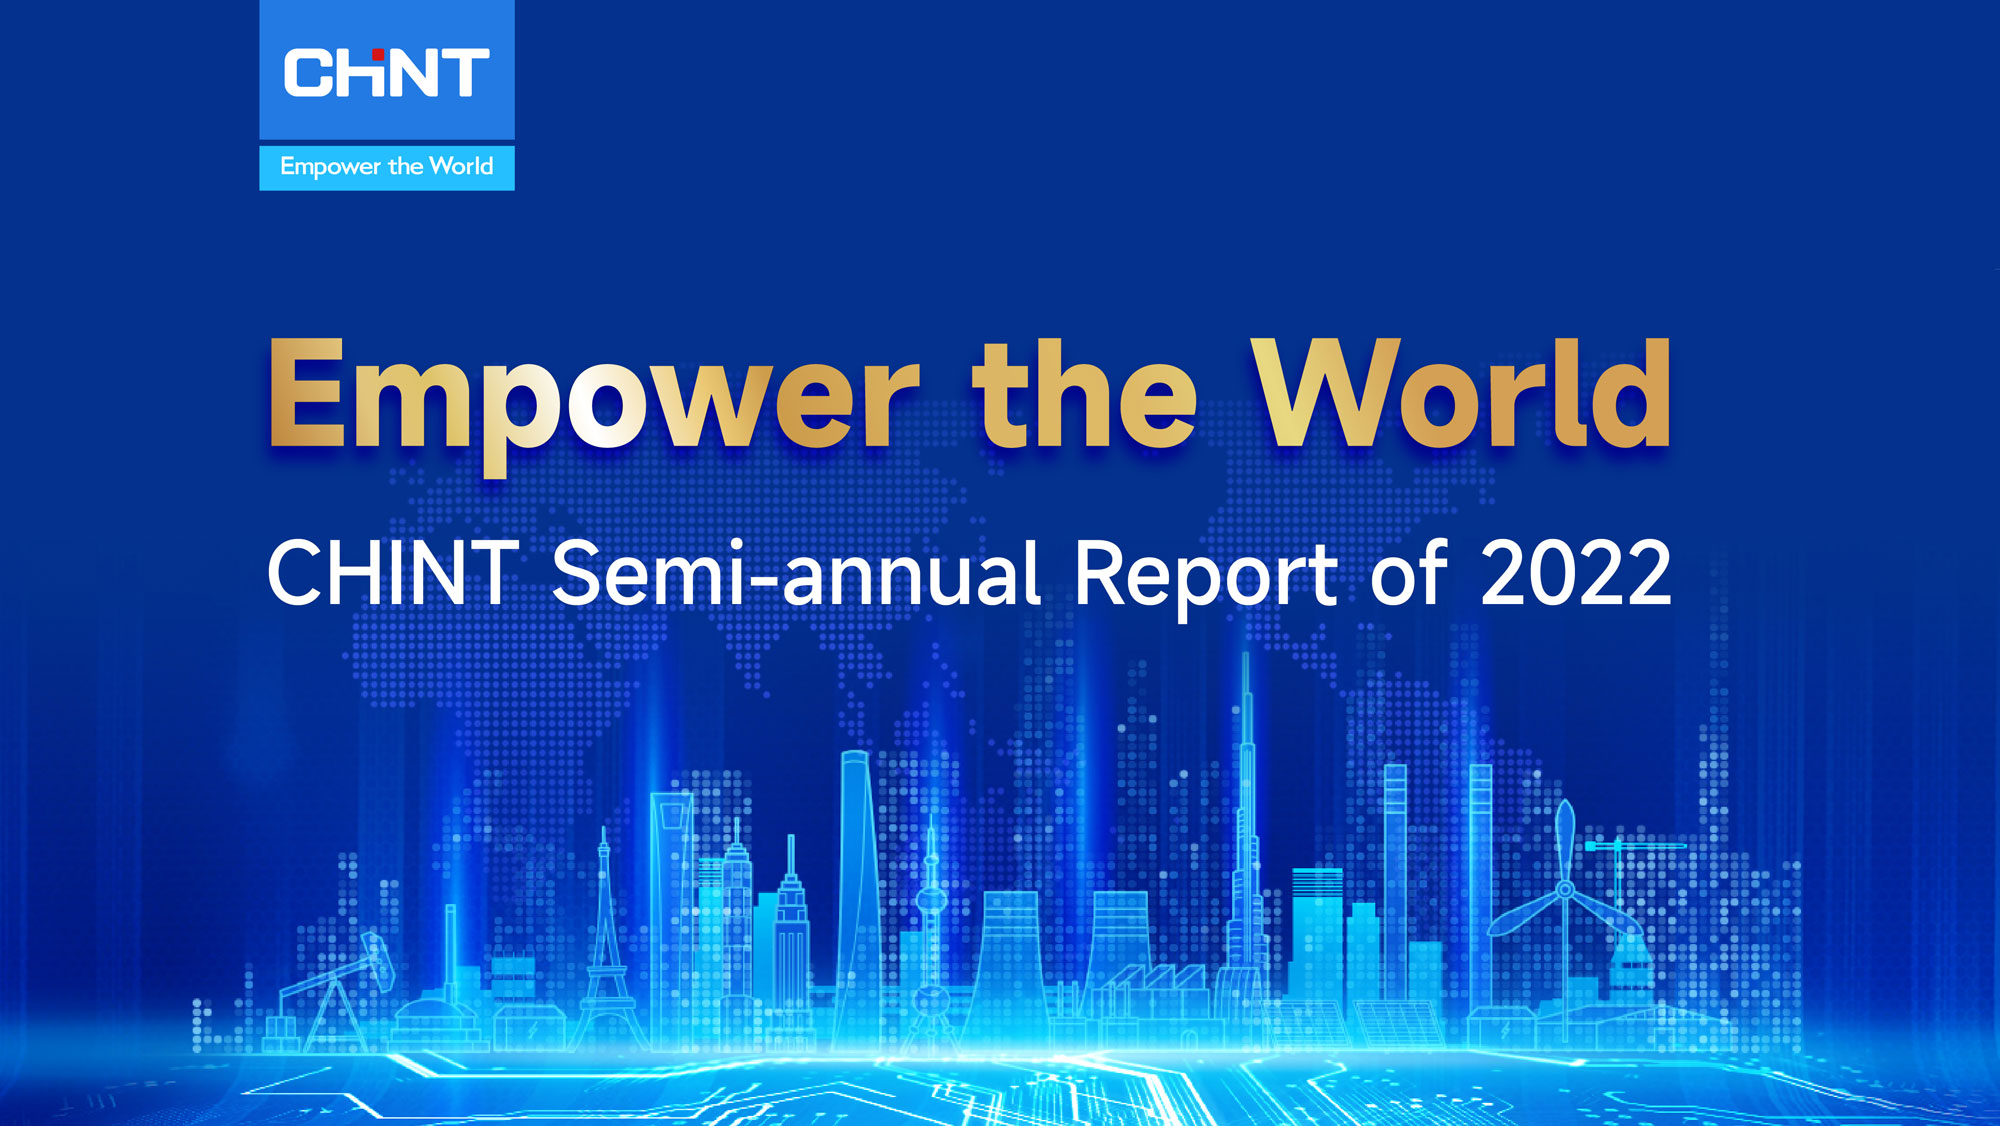 CHINT Semi-annual Report of 2022